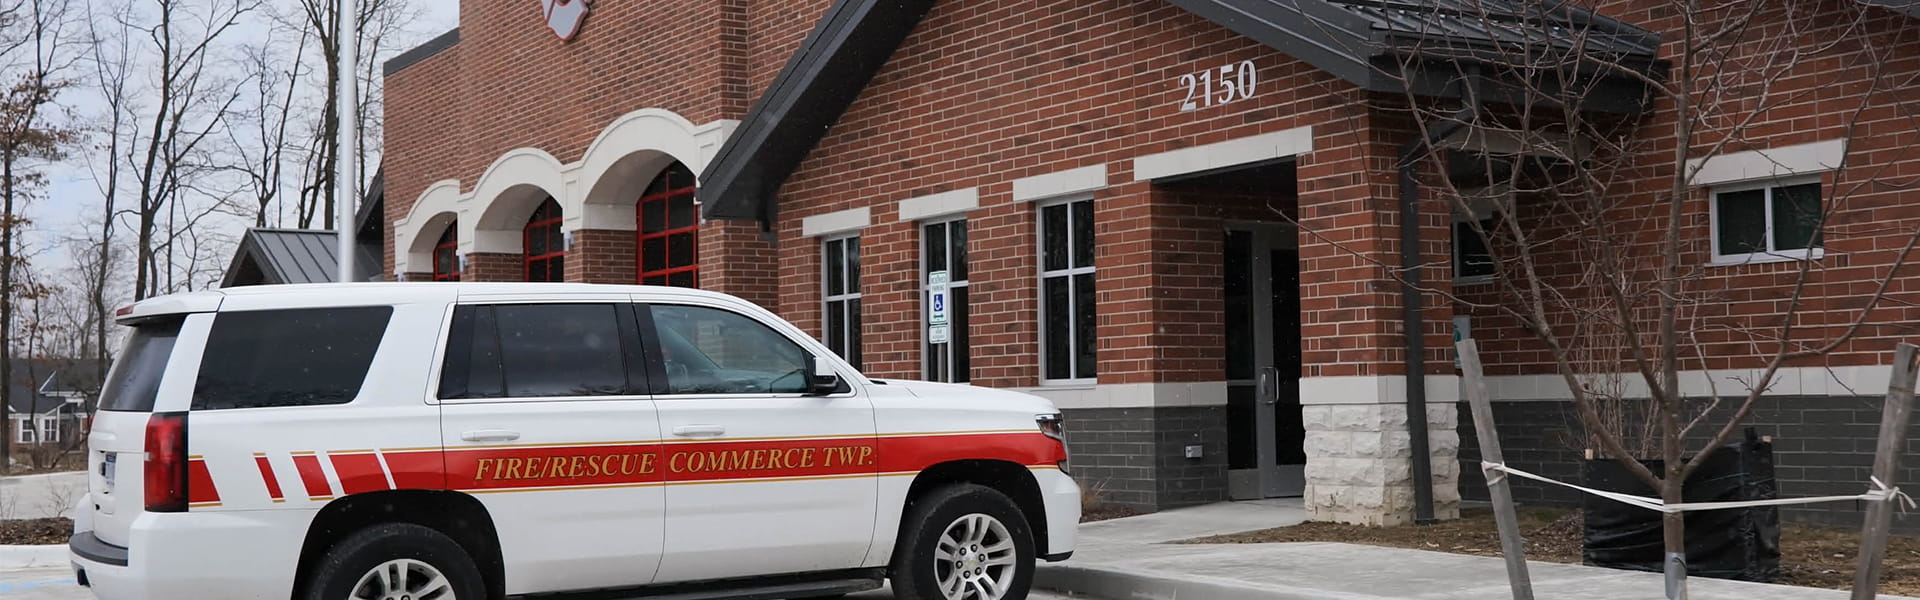 Commerce Township Fire Department front door entrance area.